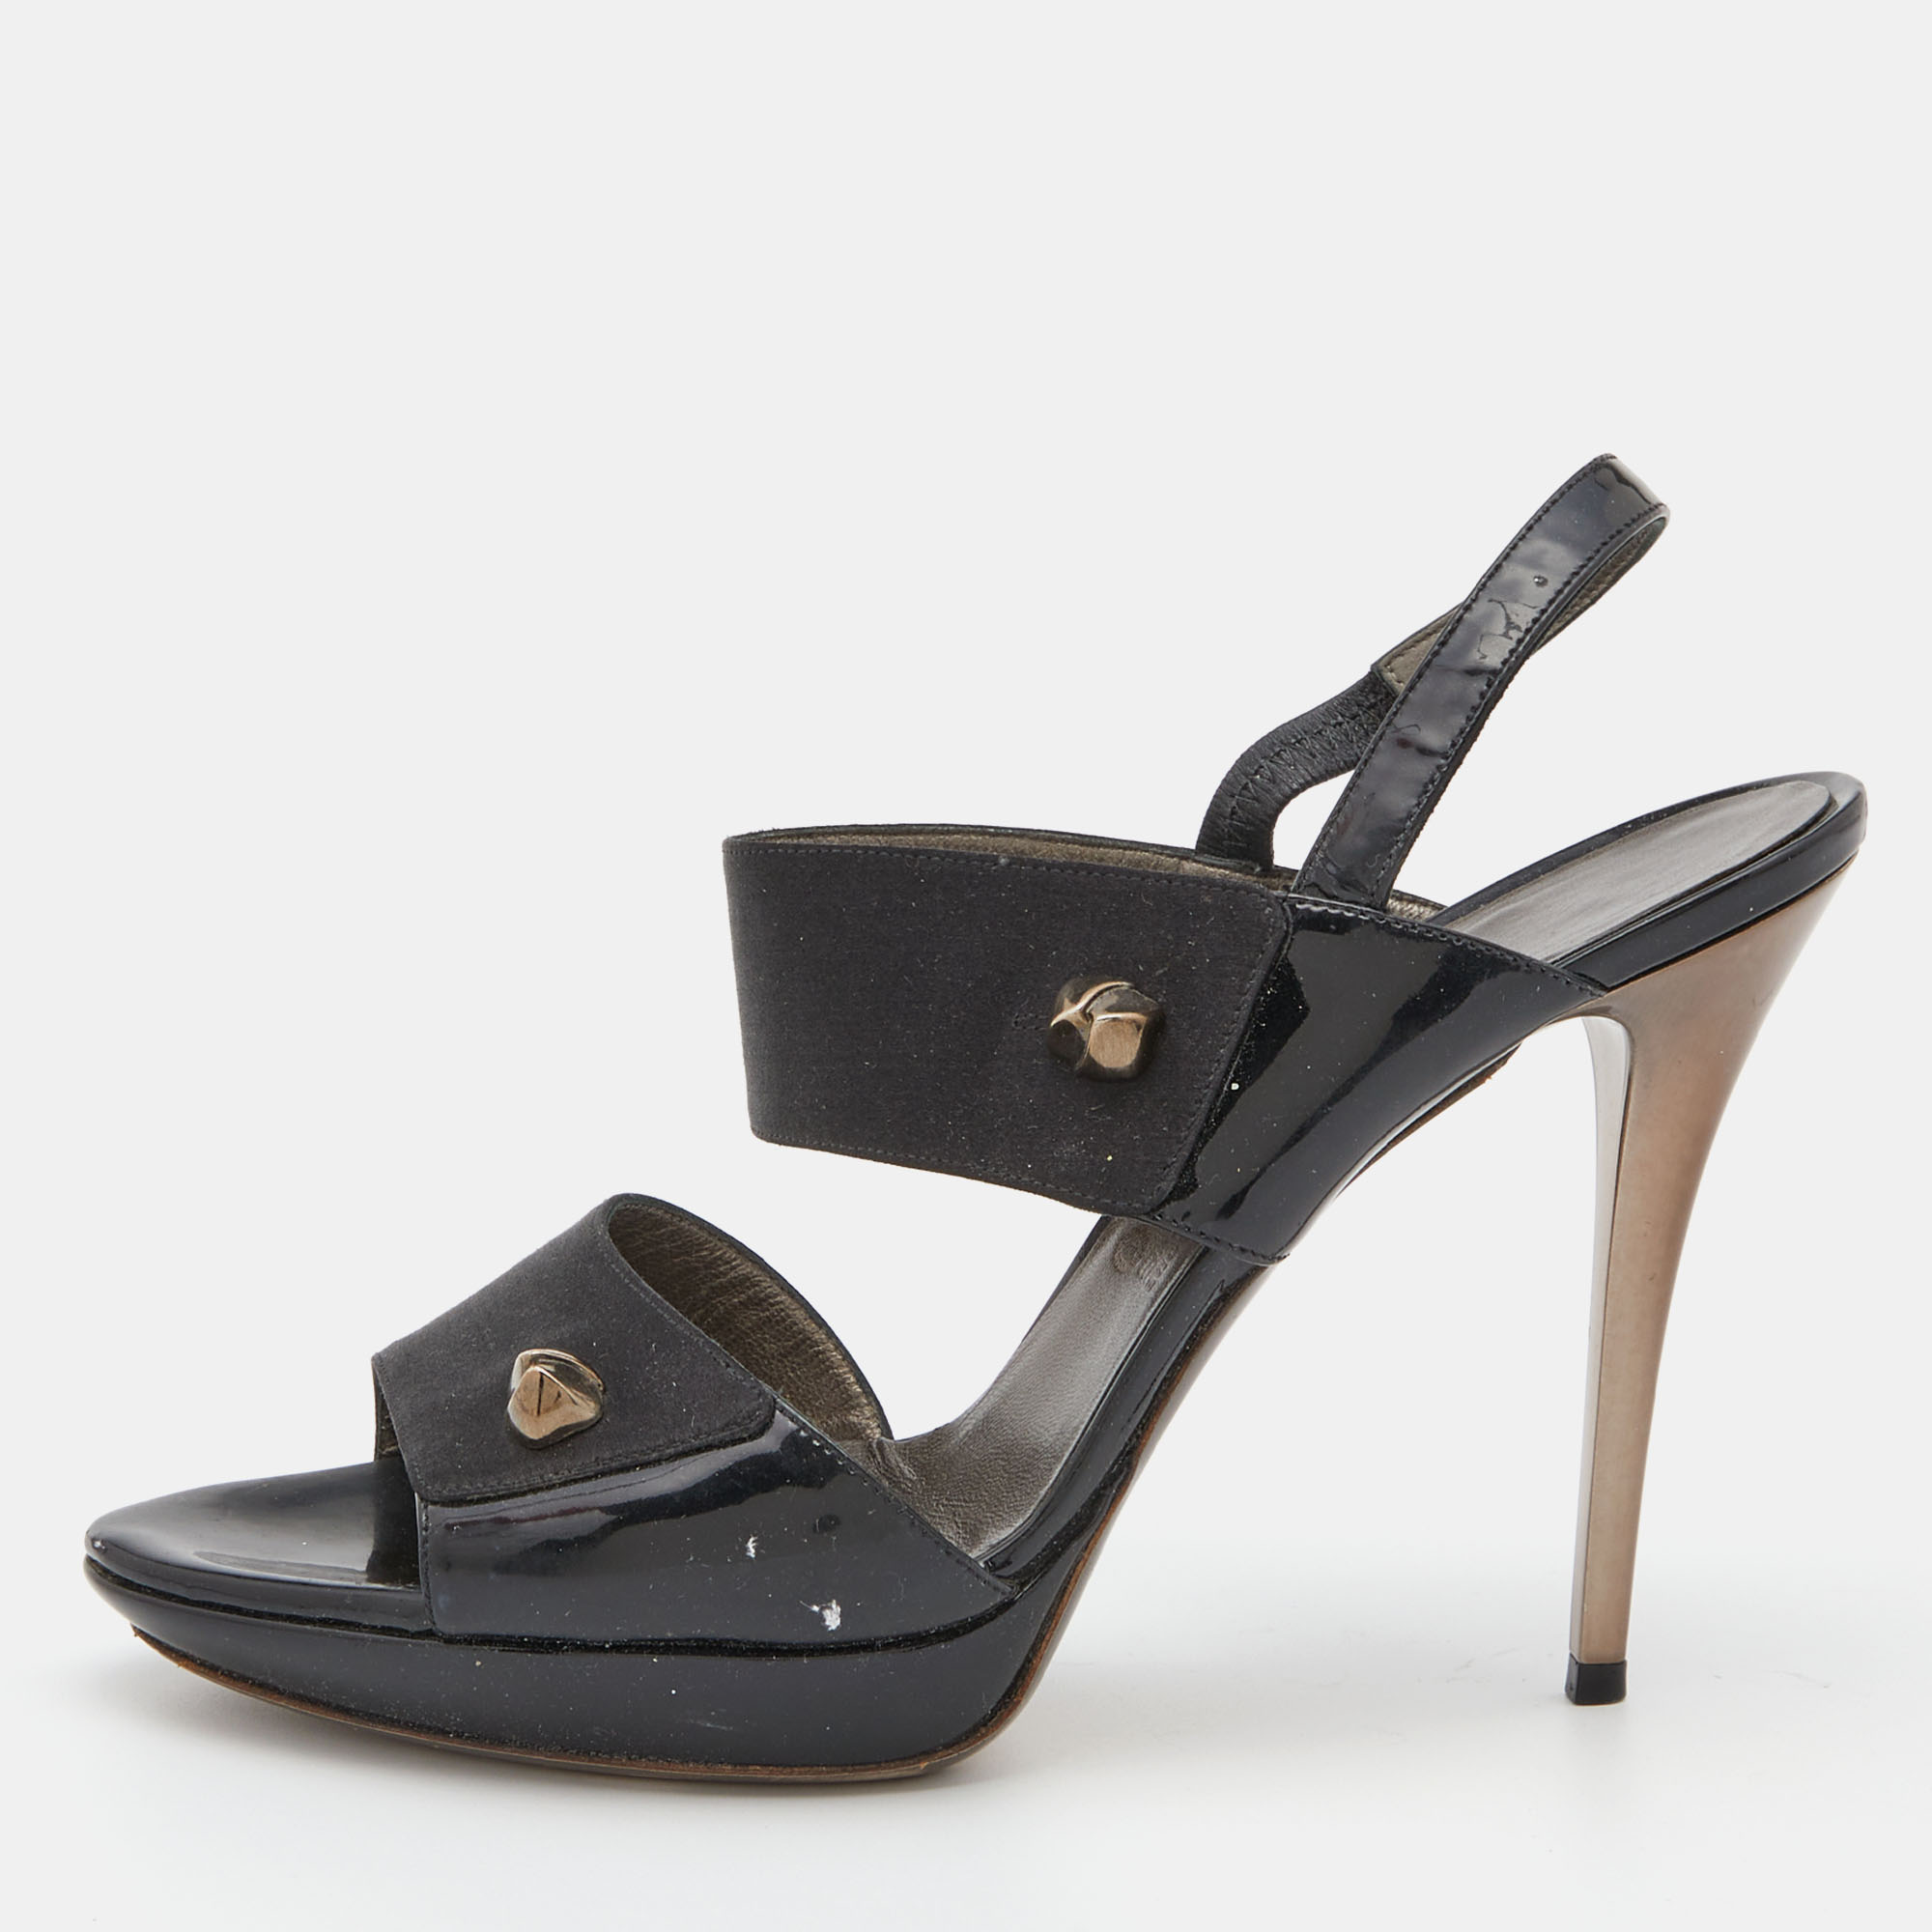 Salvatore ferragamo black satin and patent leather slingback sandals size 38